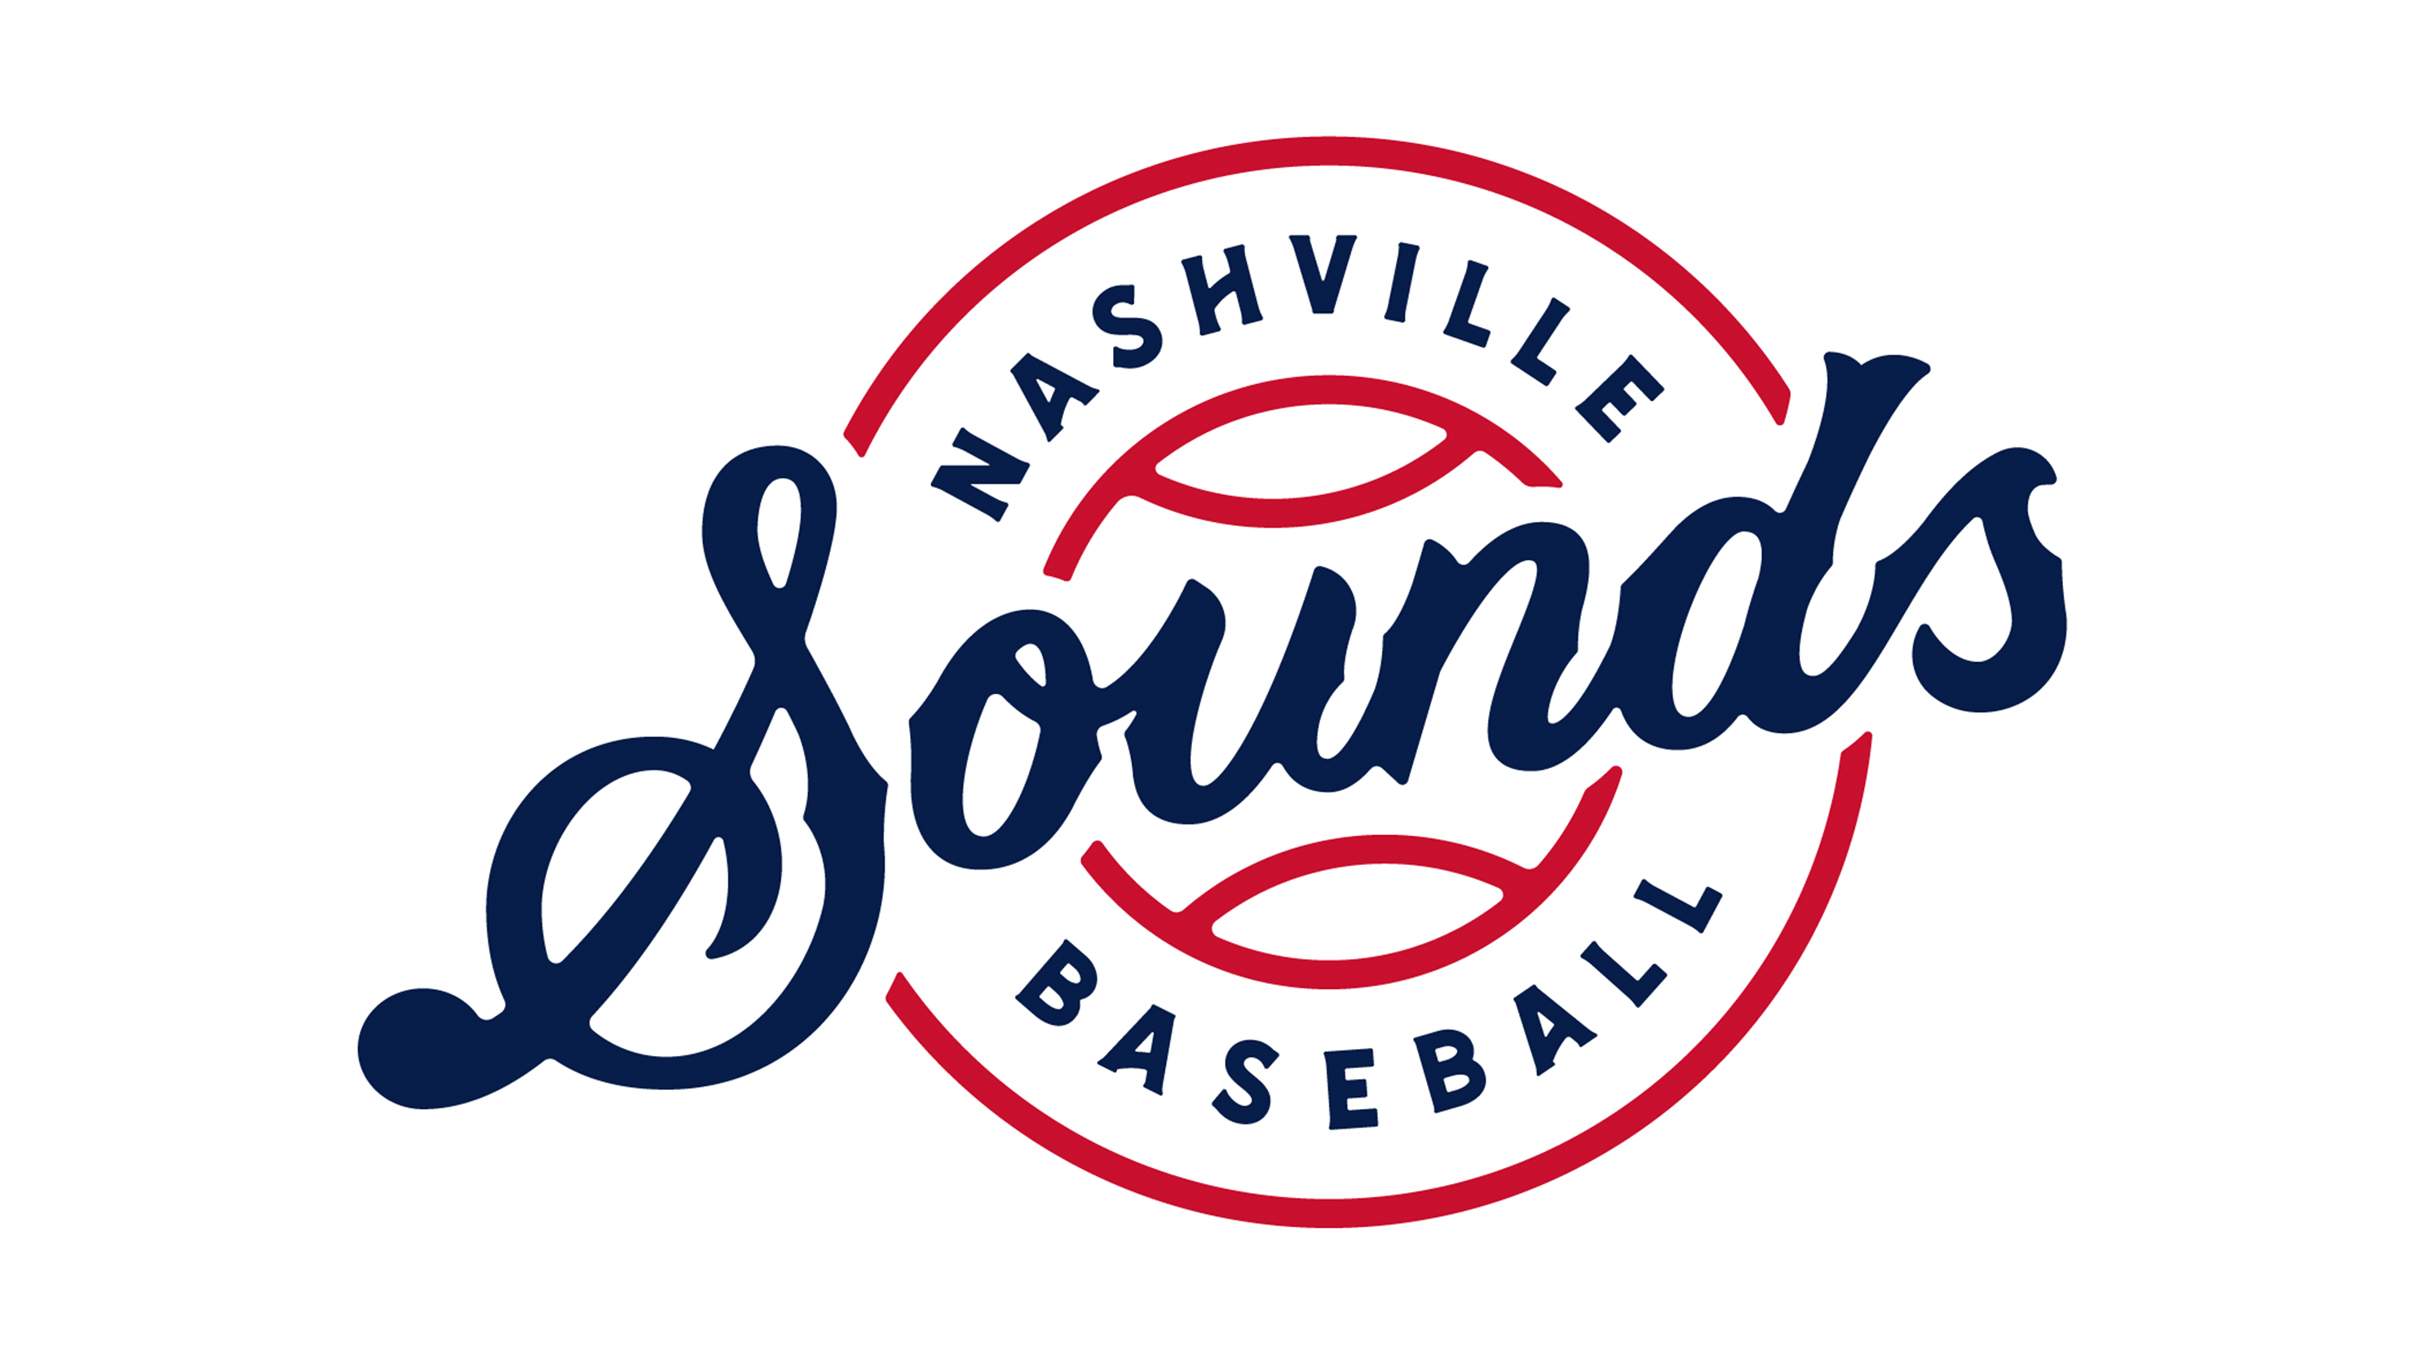 Nashville Sounds vs. Memphis Redbirds